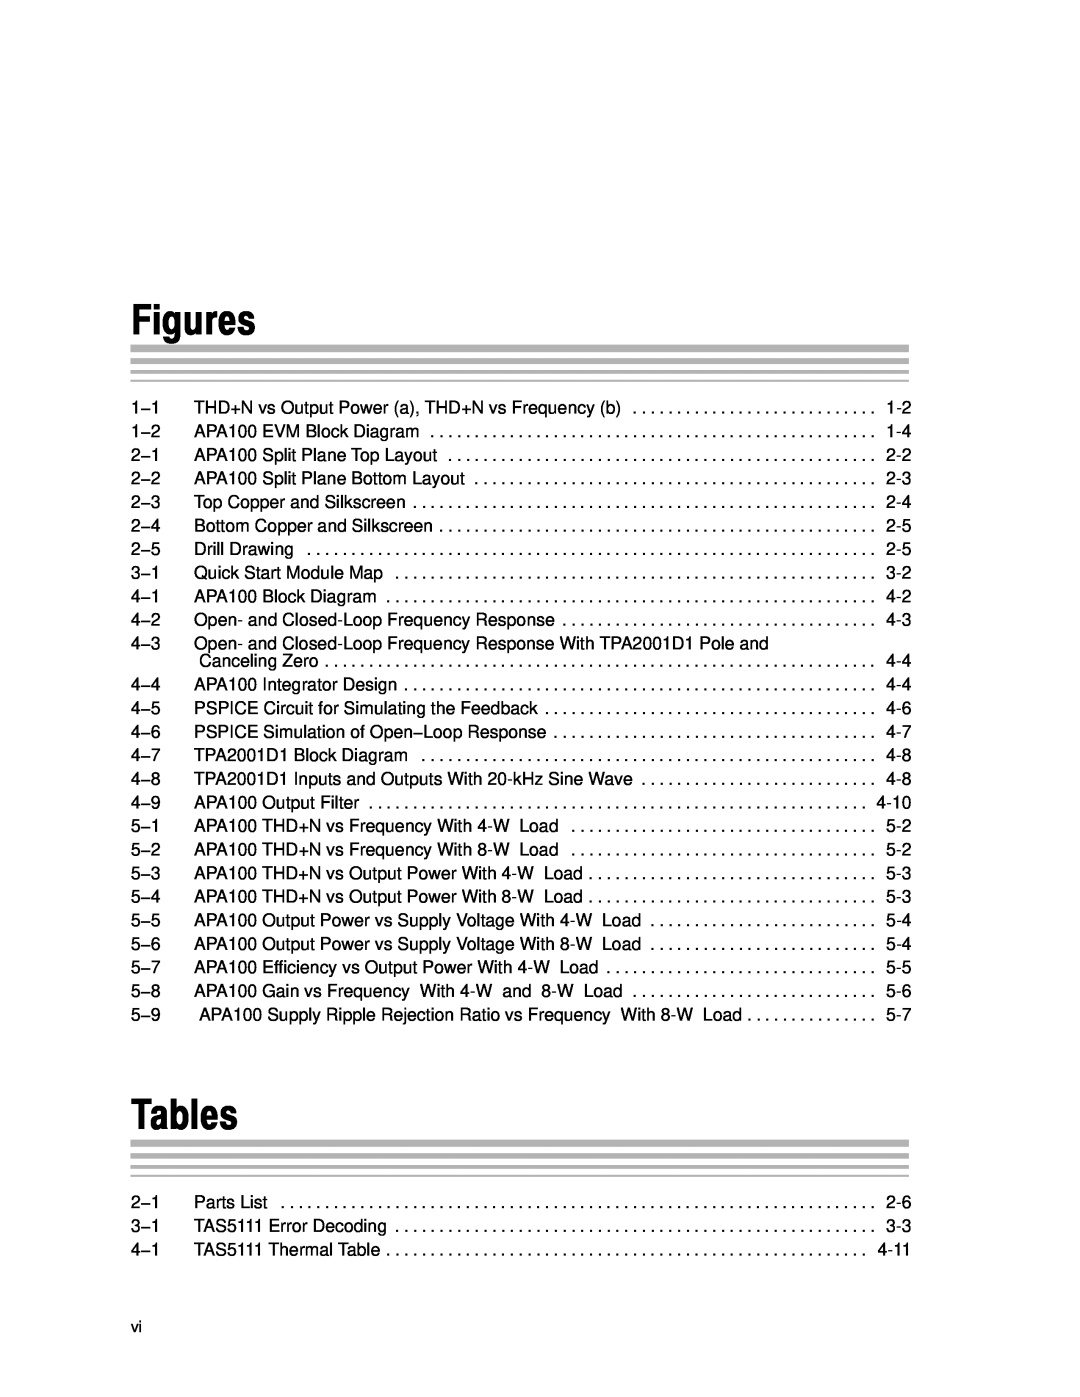 Texas Instruments APA100 manual Figures, Tables 